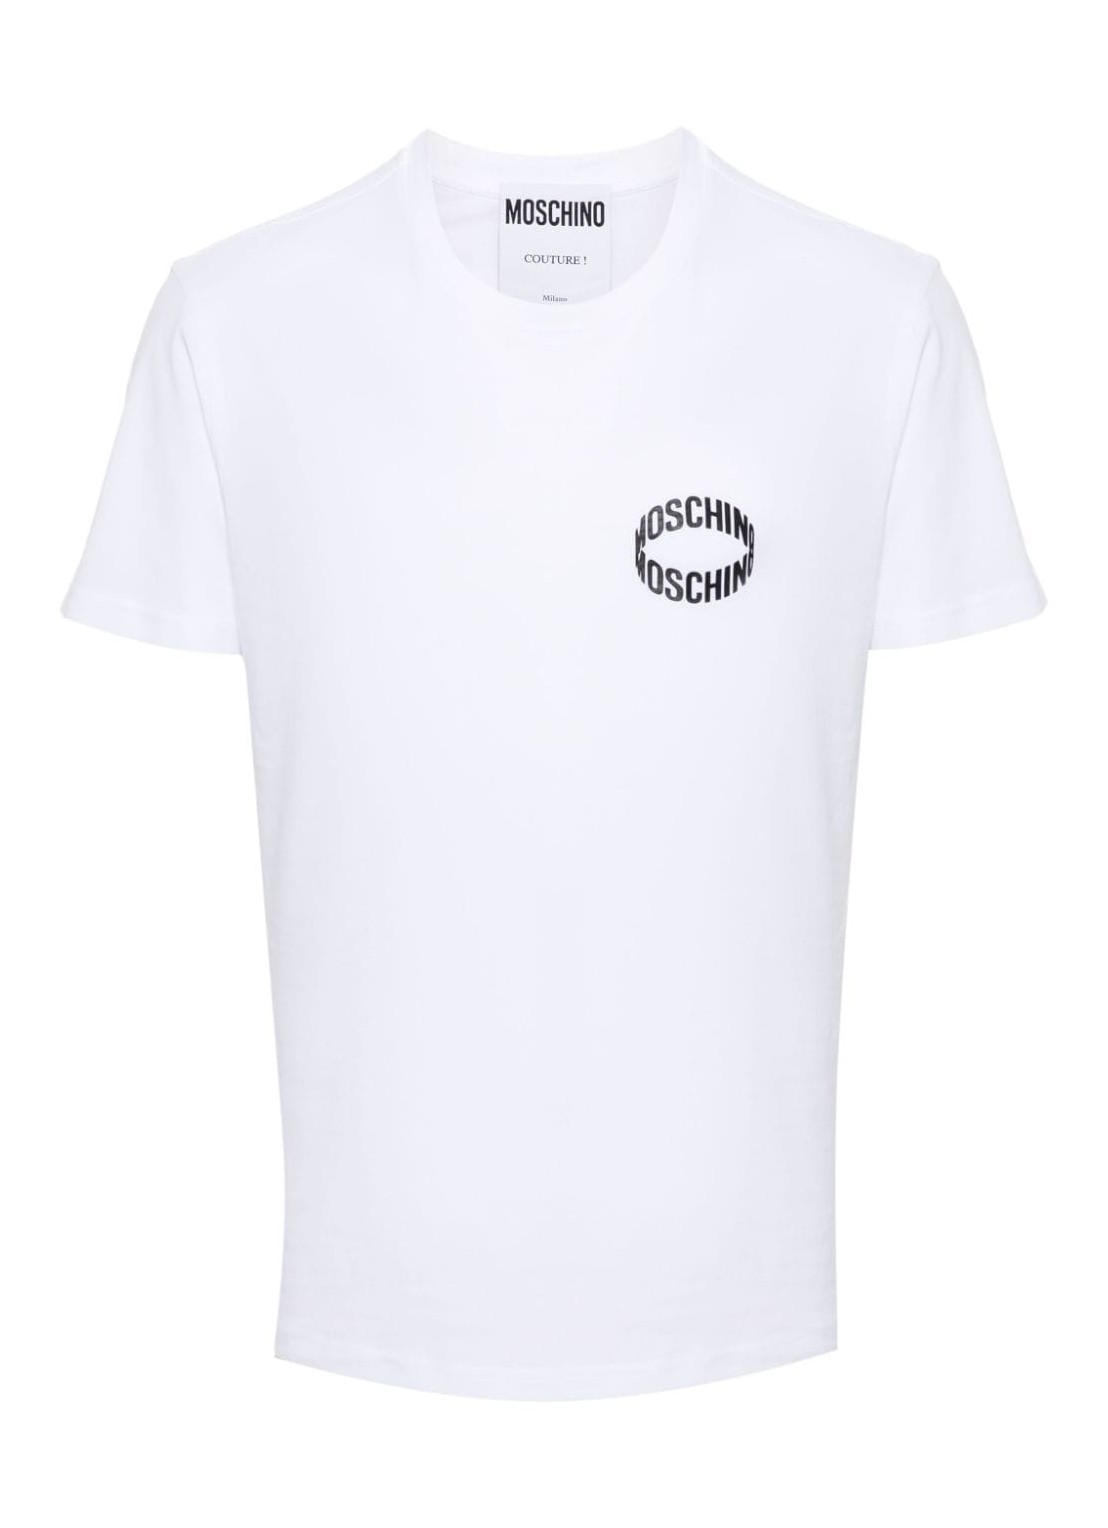 Camiseta moschino couture t-shirt man t-shirt 07152041 a1001 talla blanco
 